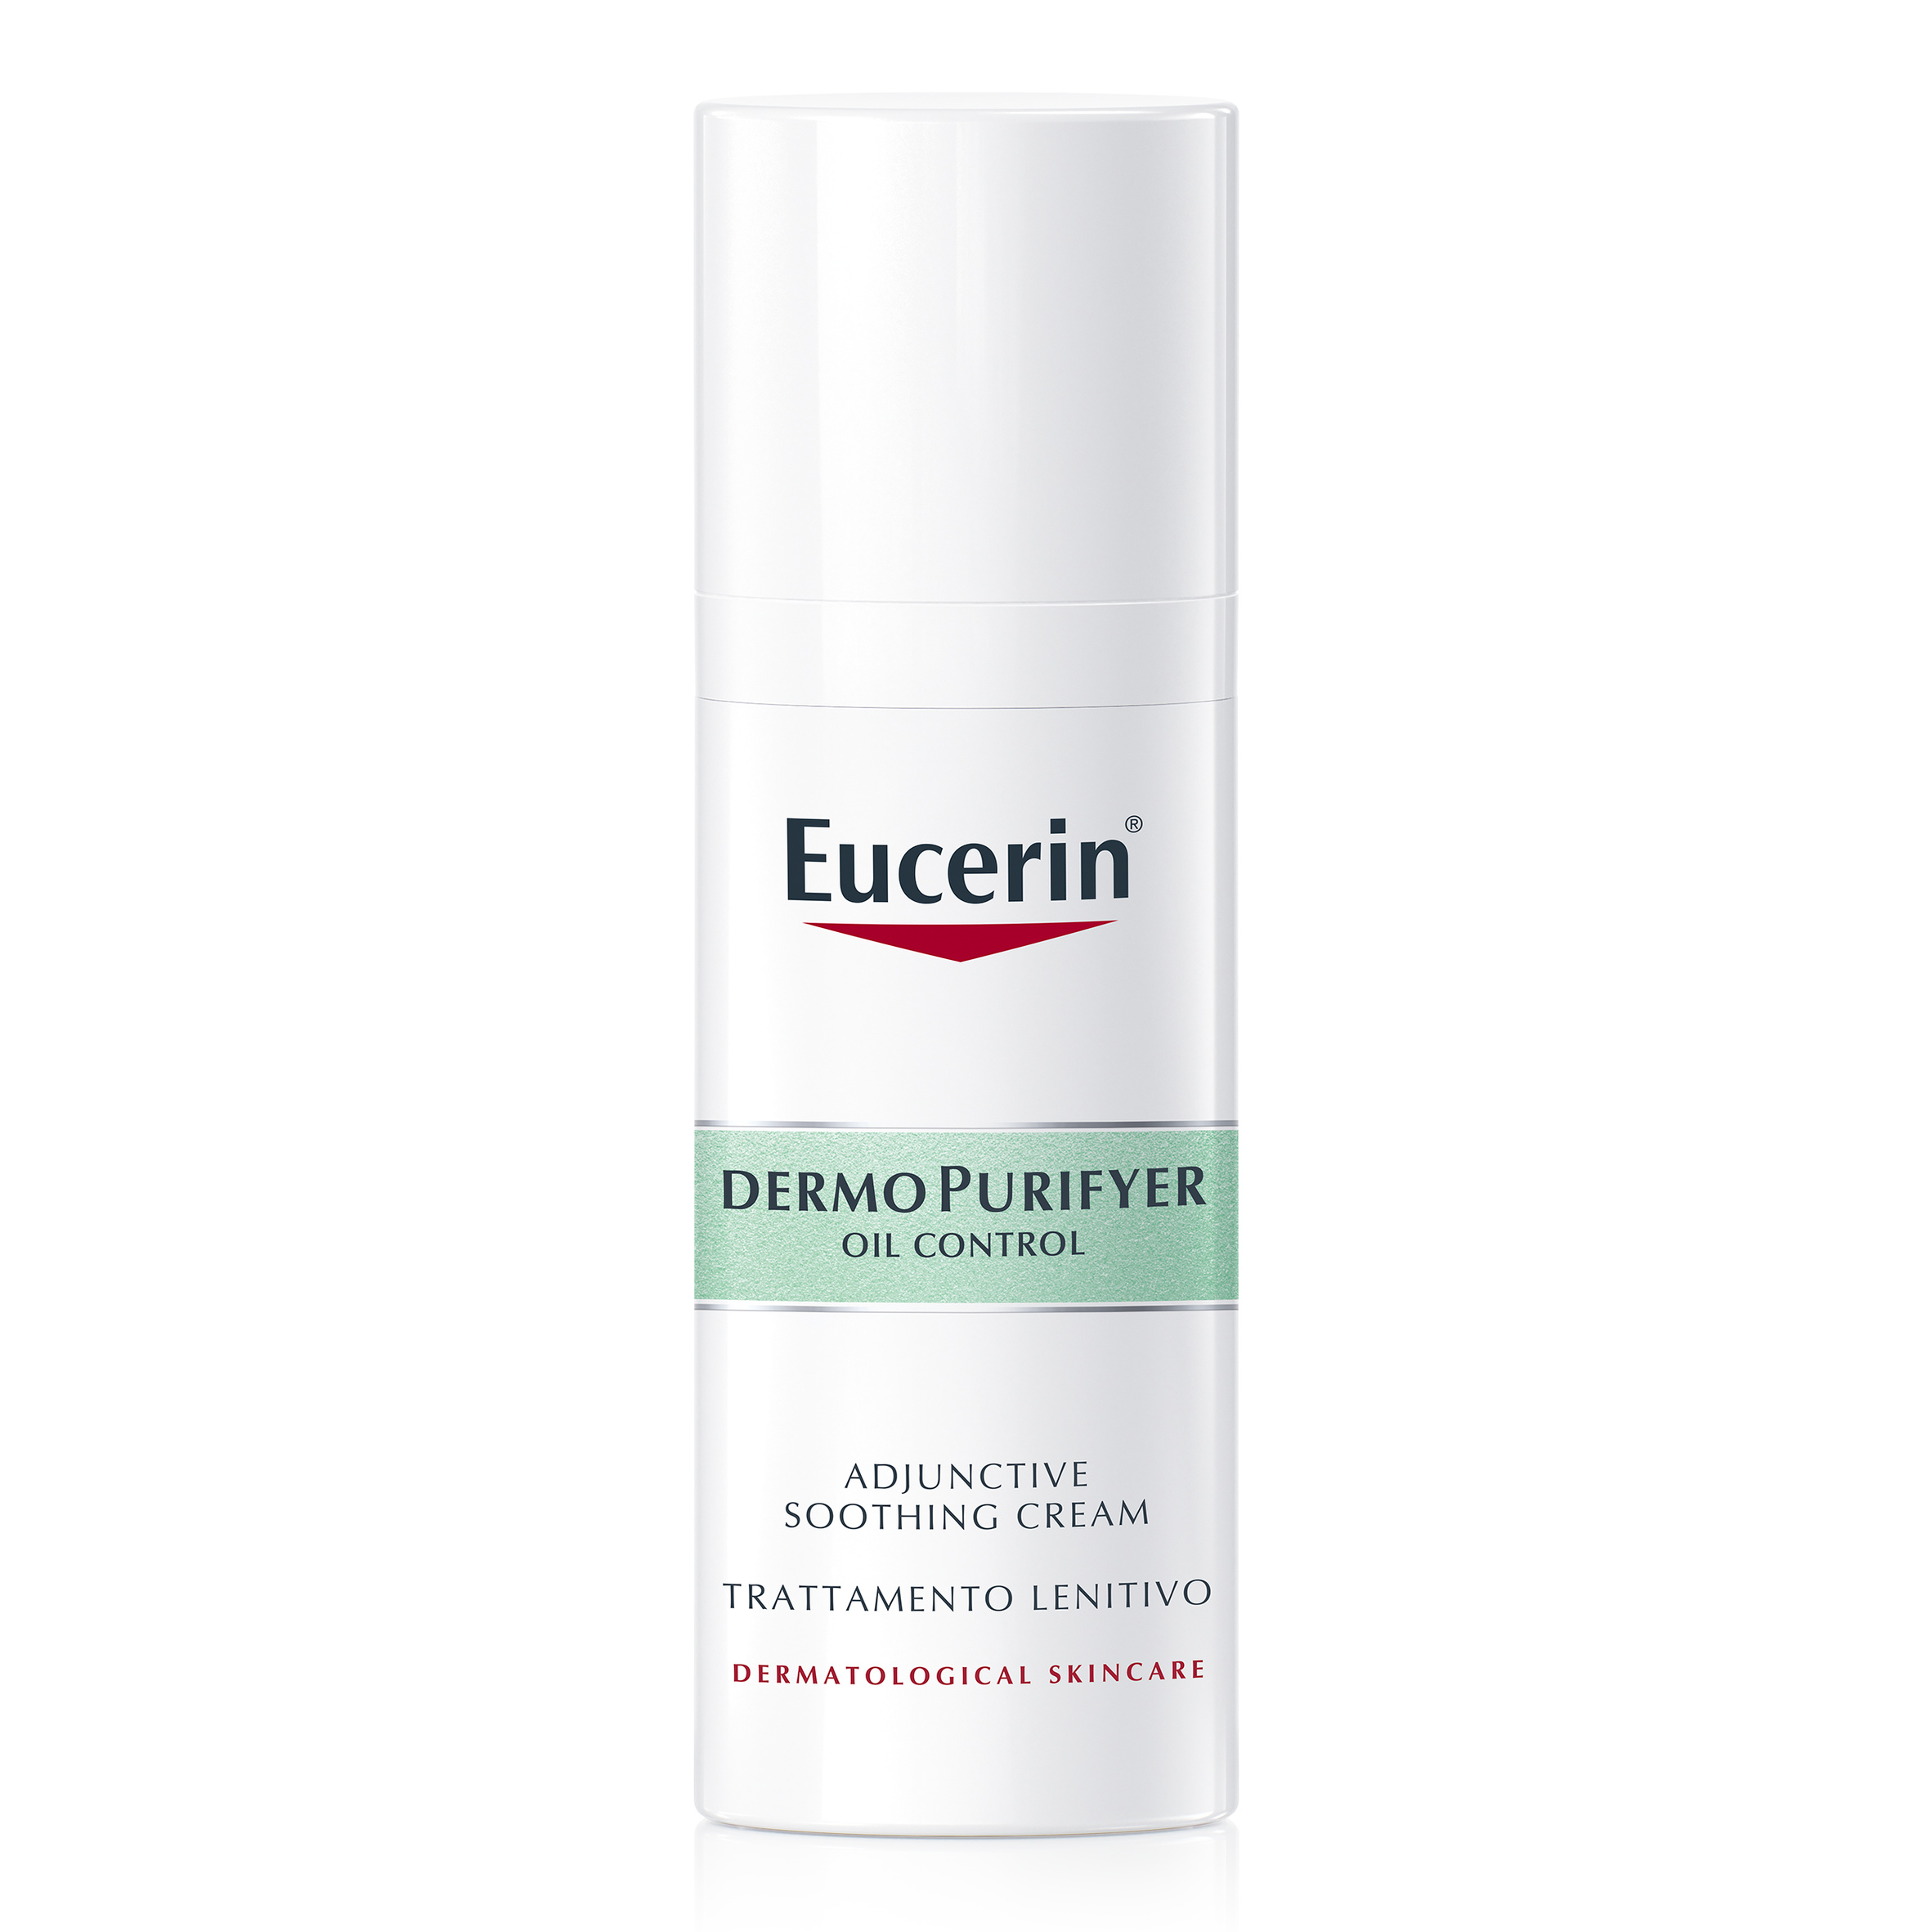 Eucerin DermoPurifyer Oil Control Adjunctive Soothing Cream